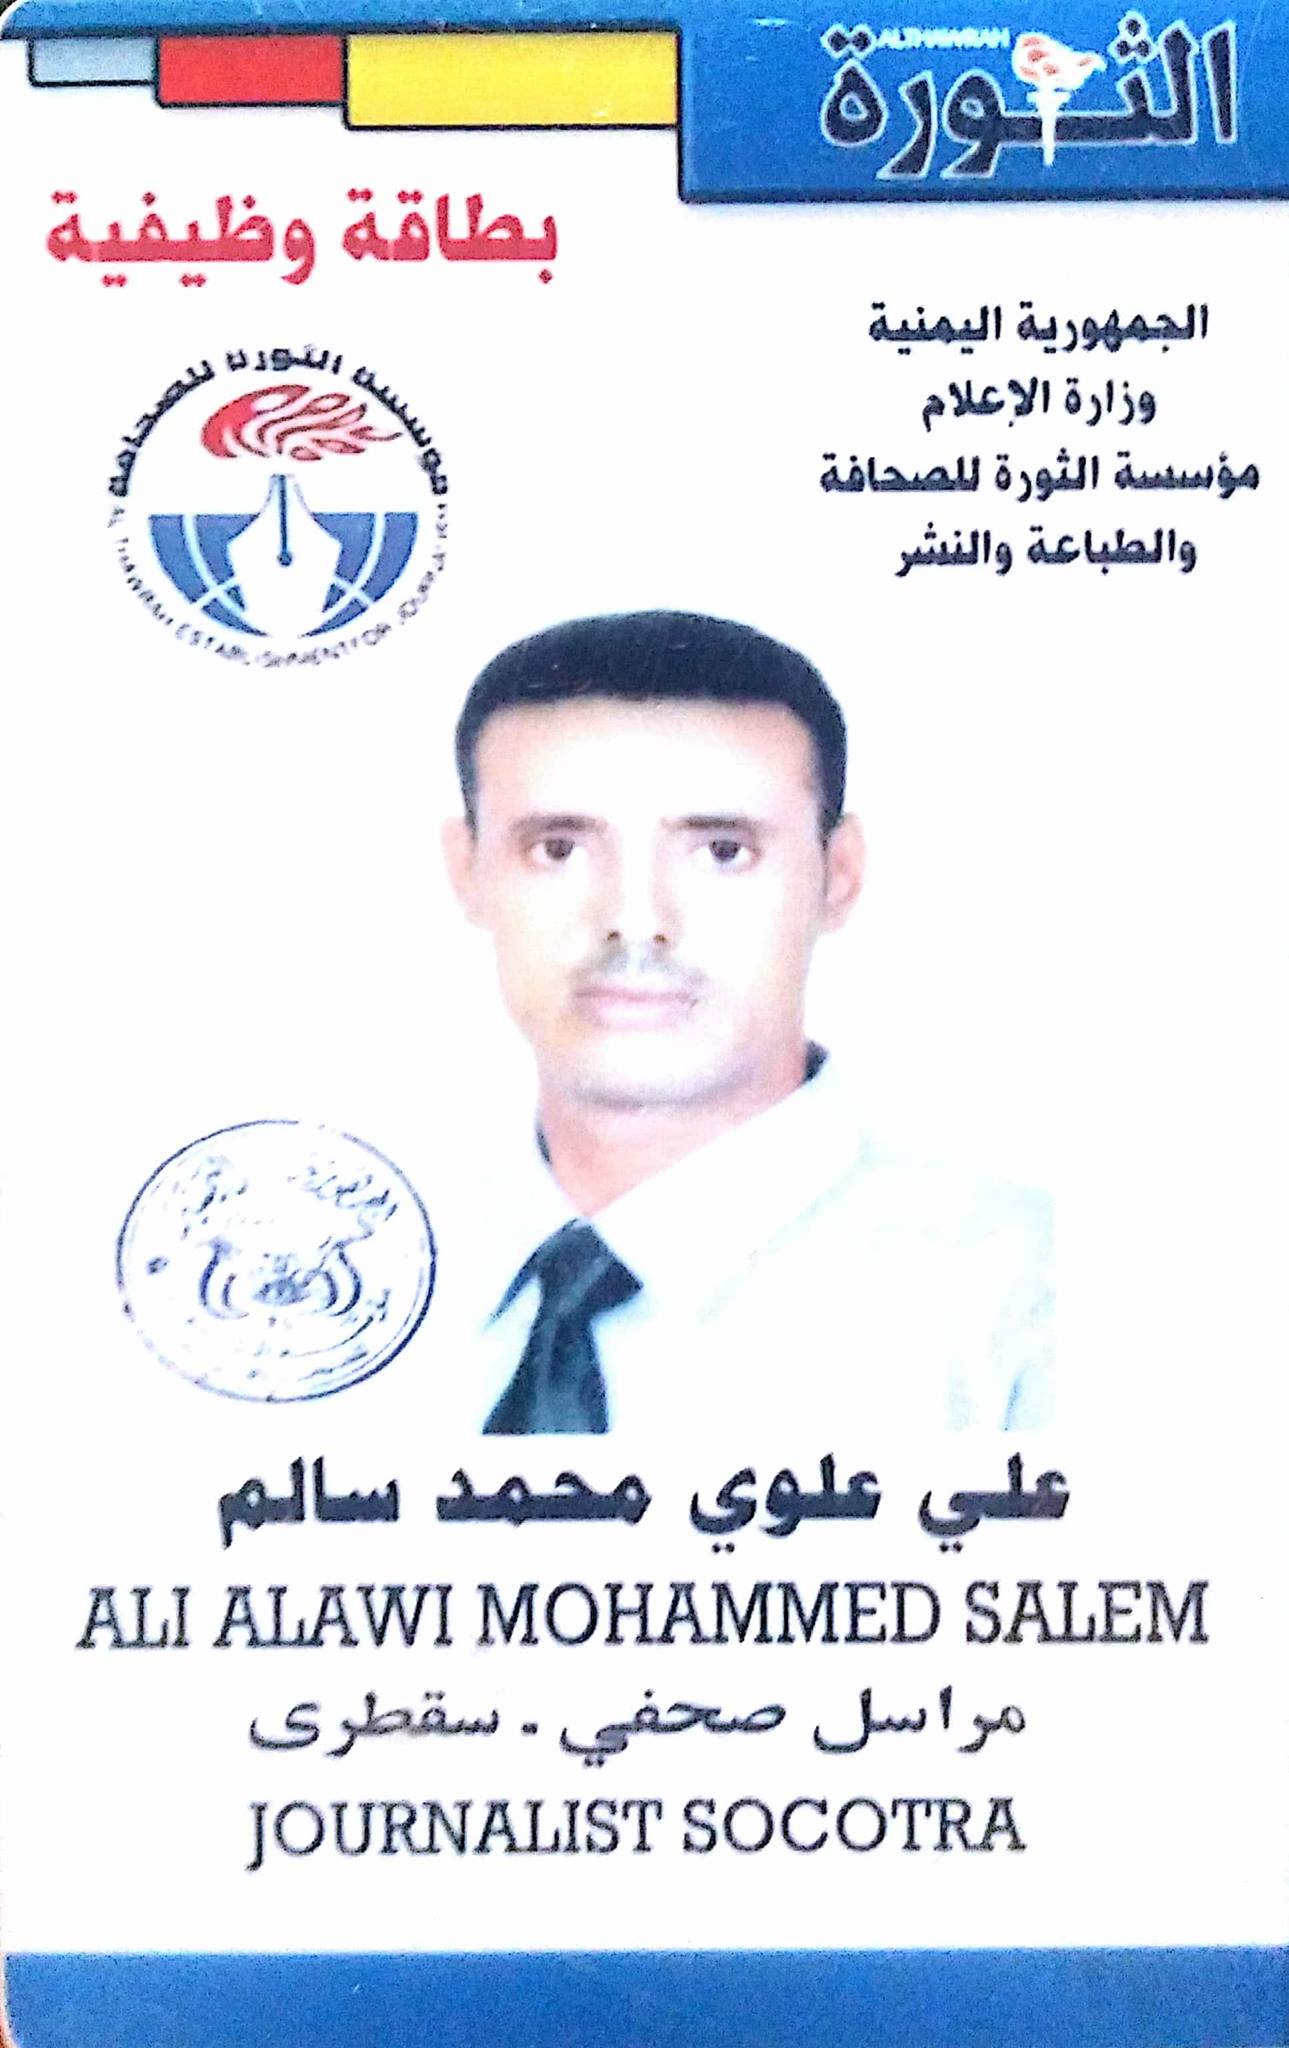 Ali Alawi Mohammed Salem Journalist Socotra.jpg